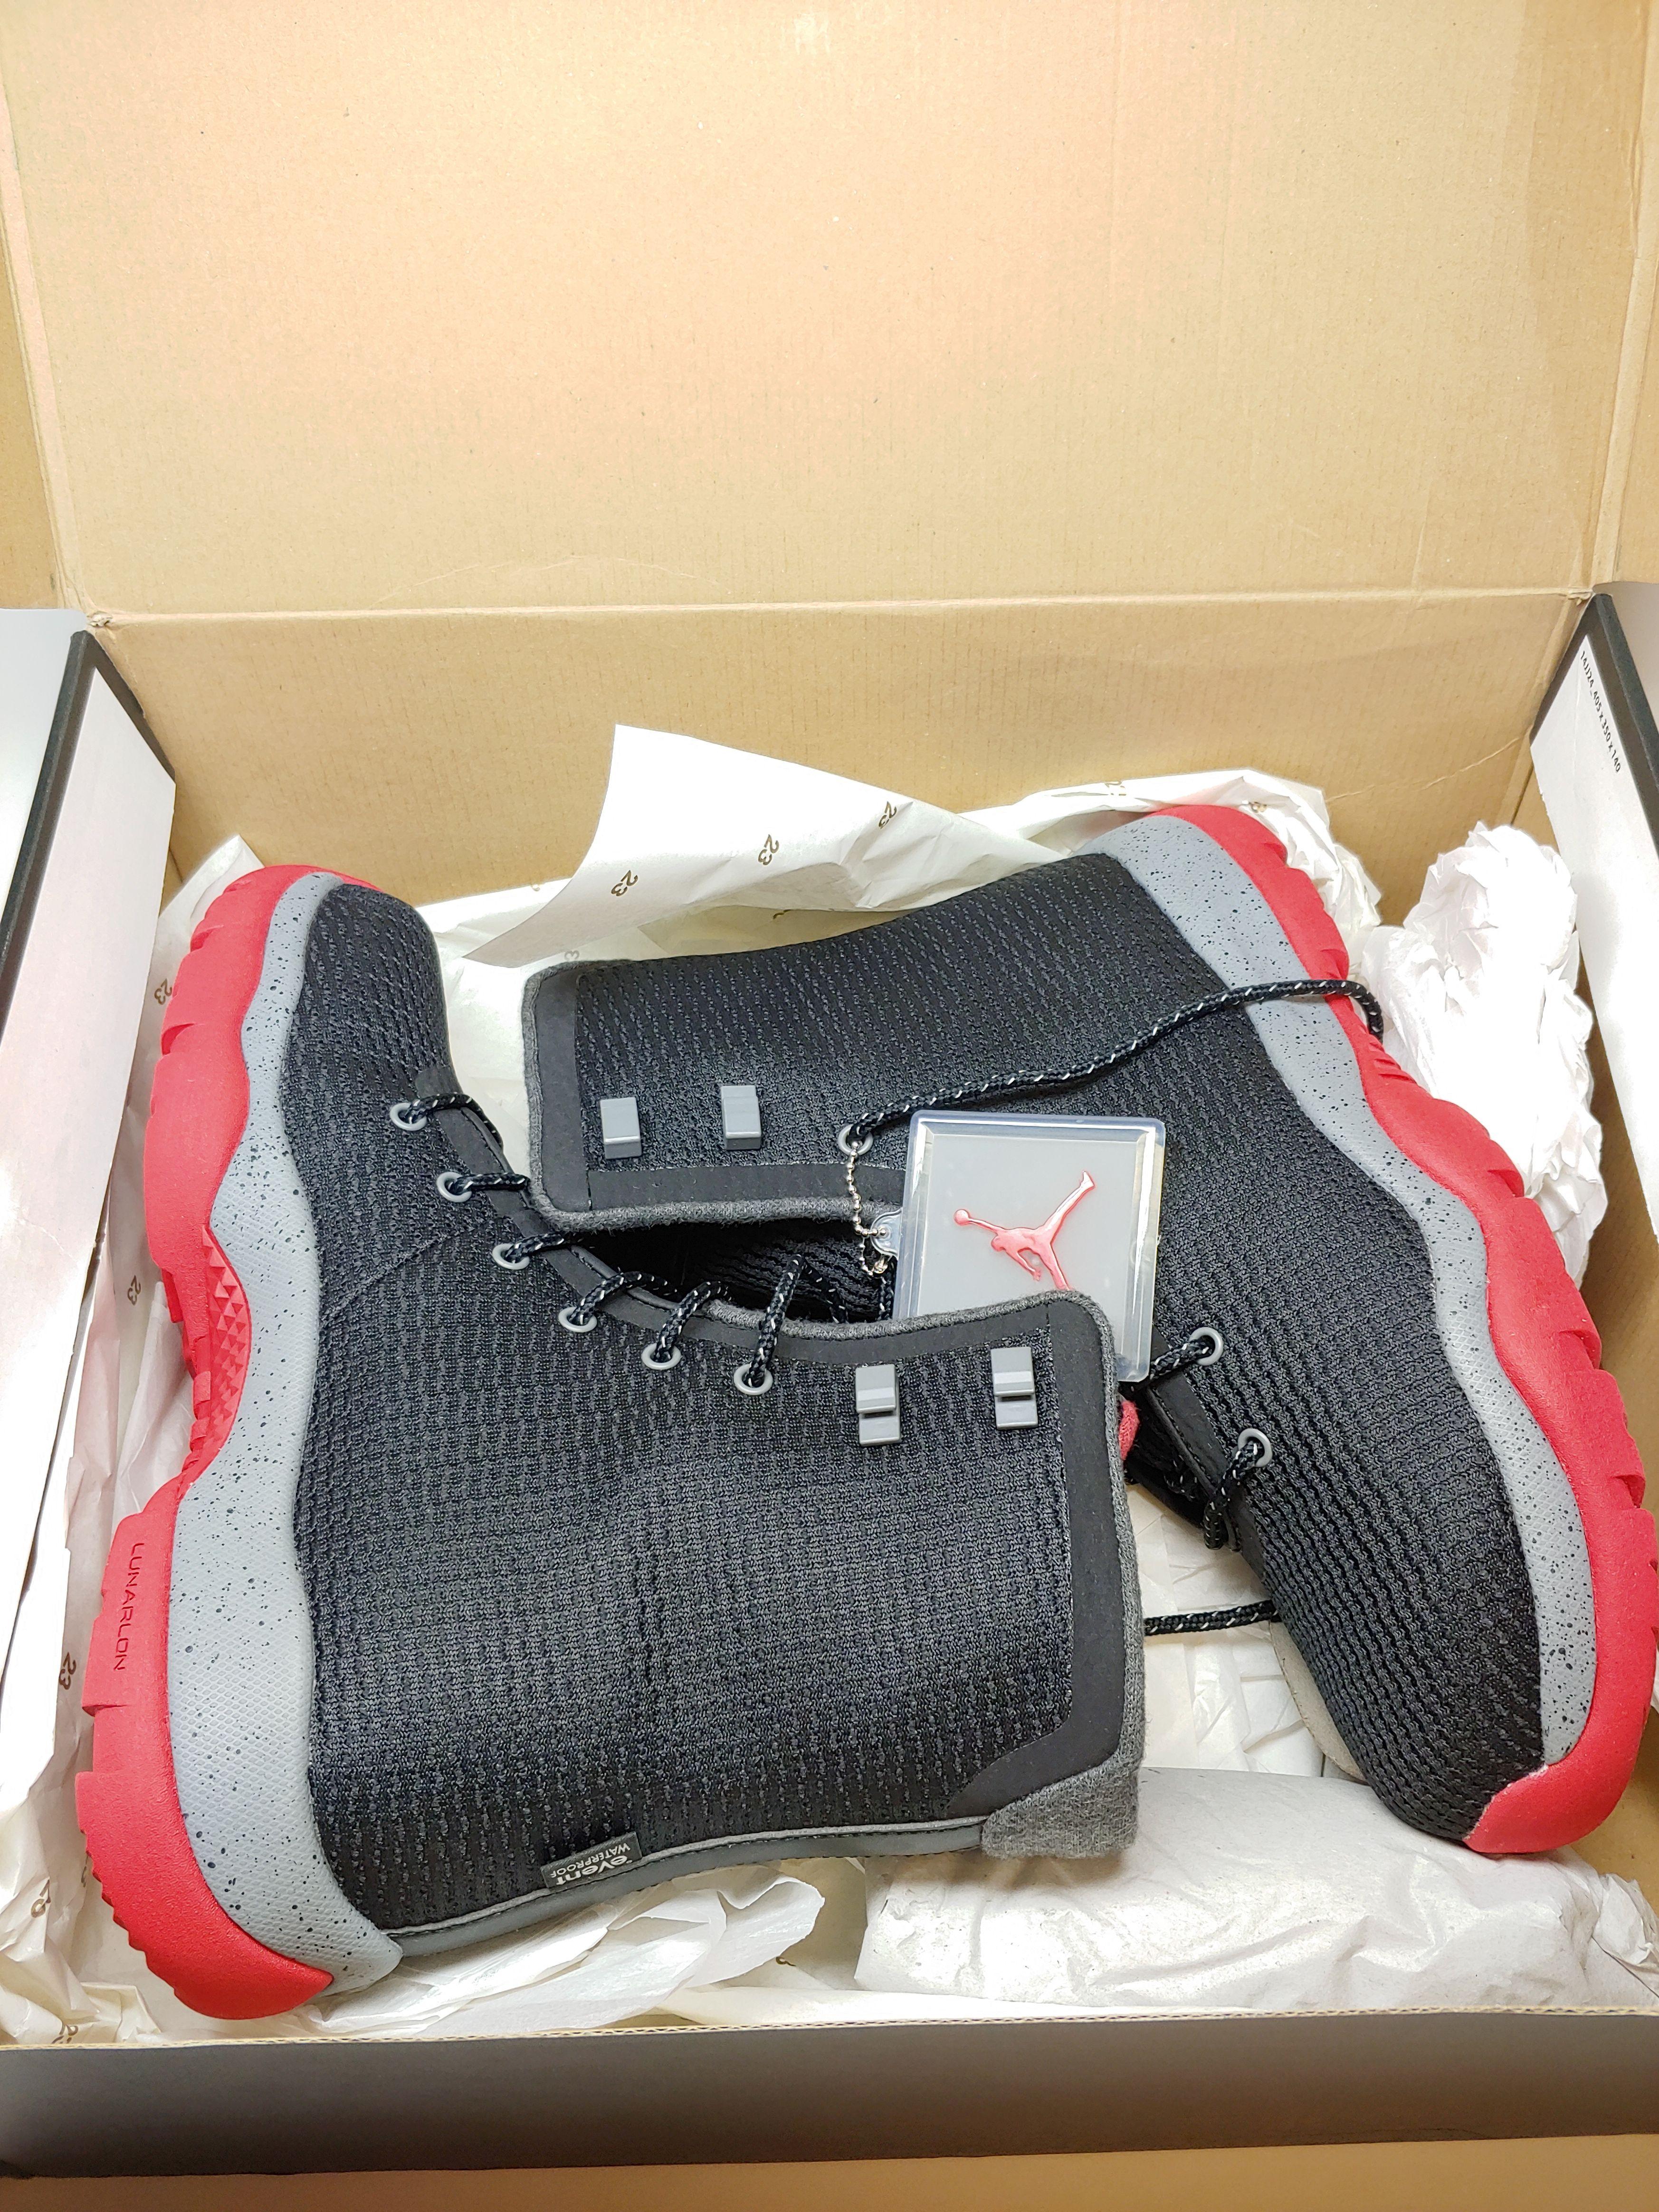 Brand New Mens NIke Air Jordan Future Boot Waterproof Black Cool Grey Gym Red 854554 001 Size 8